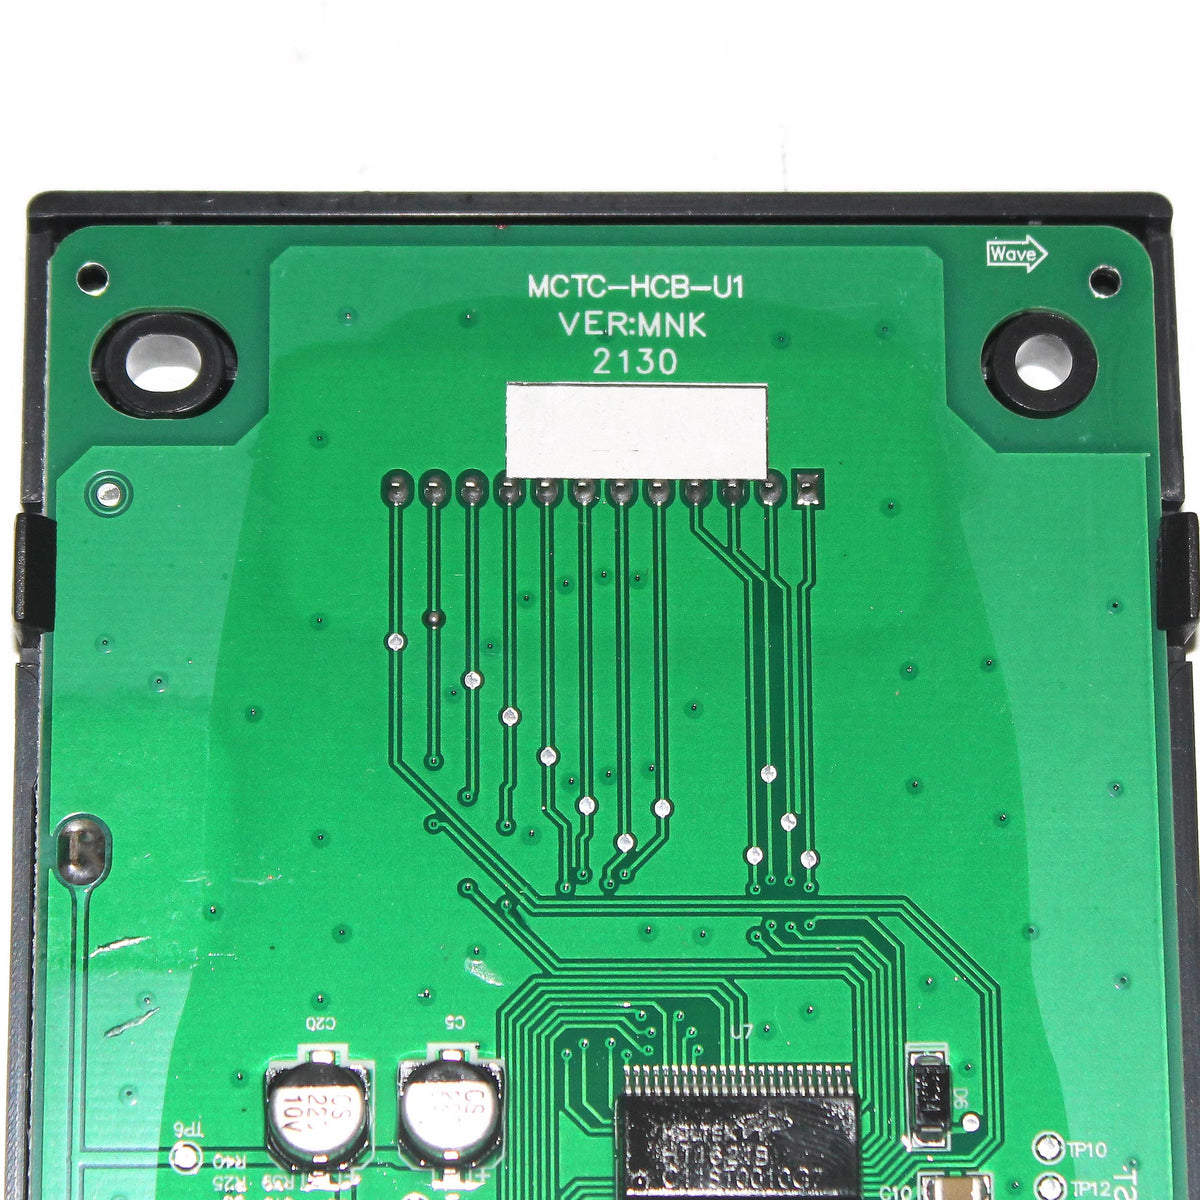 MCTC-HCB-U1 outbound call display board MCTC-HCB-U2